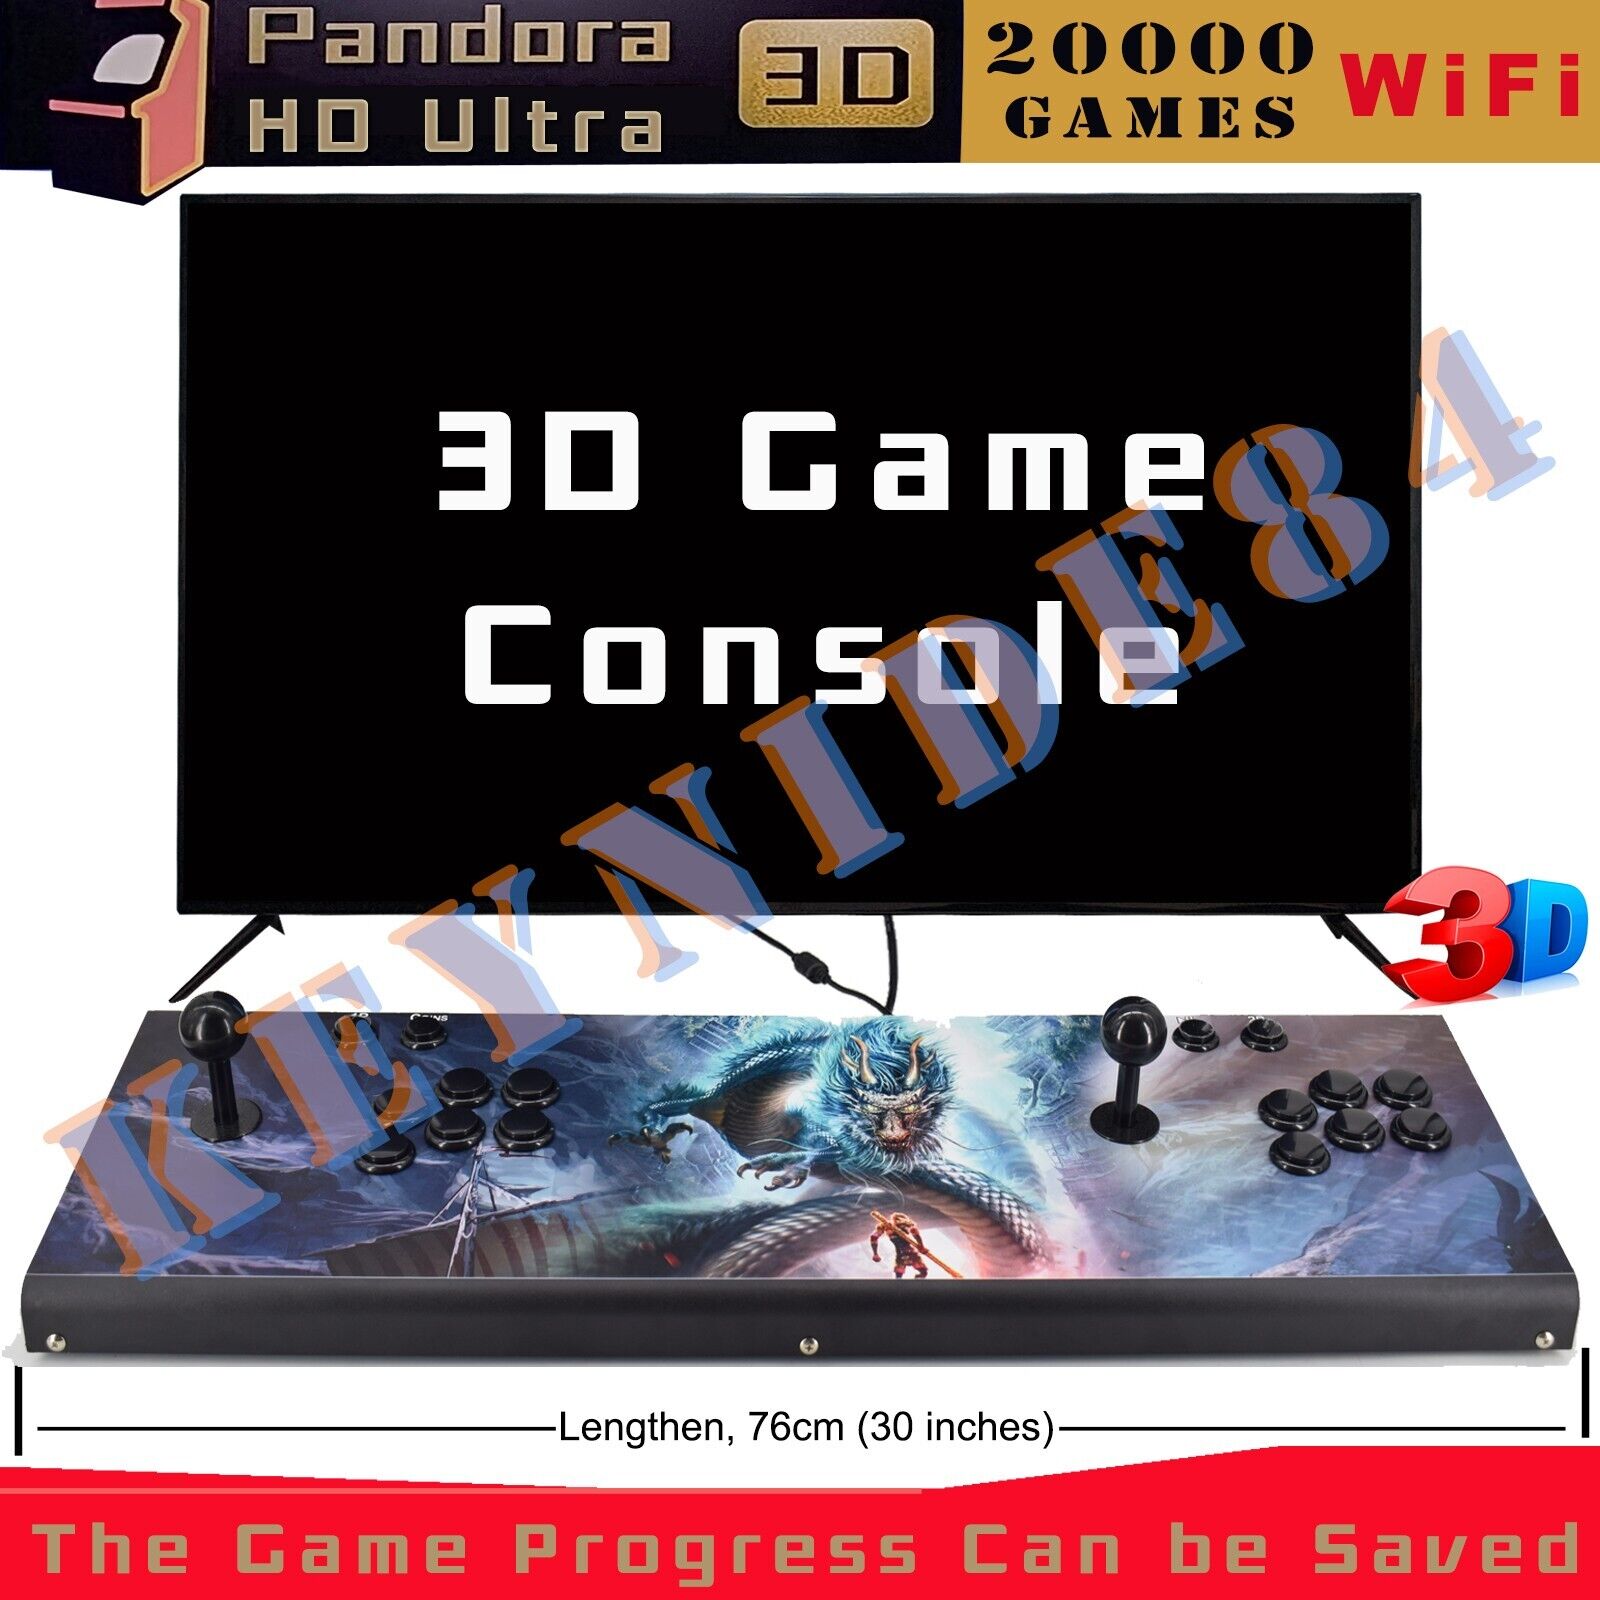 NEW ALL Metal Lengthen 20000 Games Pandora\'s Box 3D WiFi 2 Players Retro Video